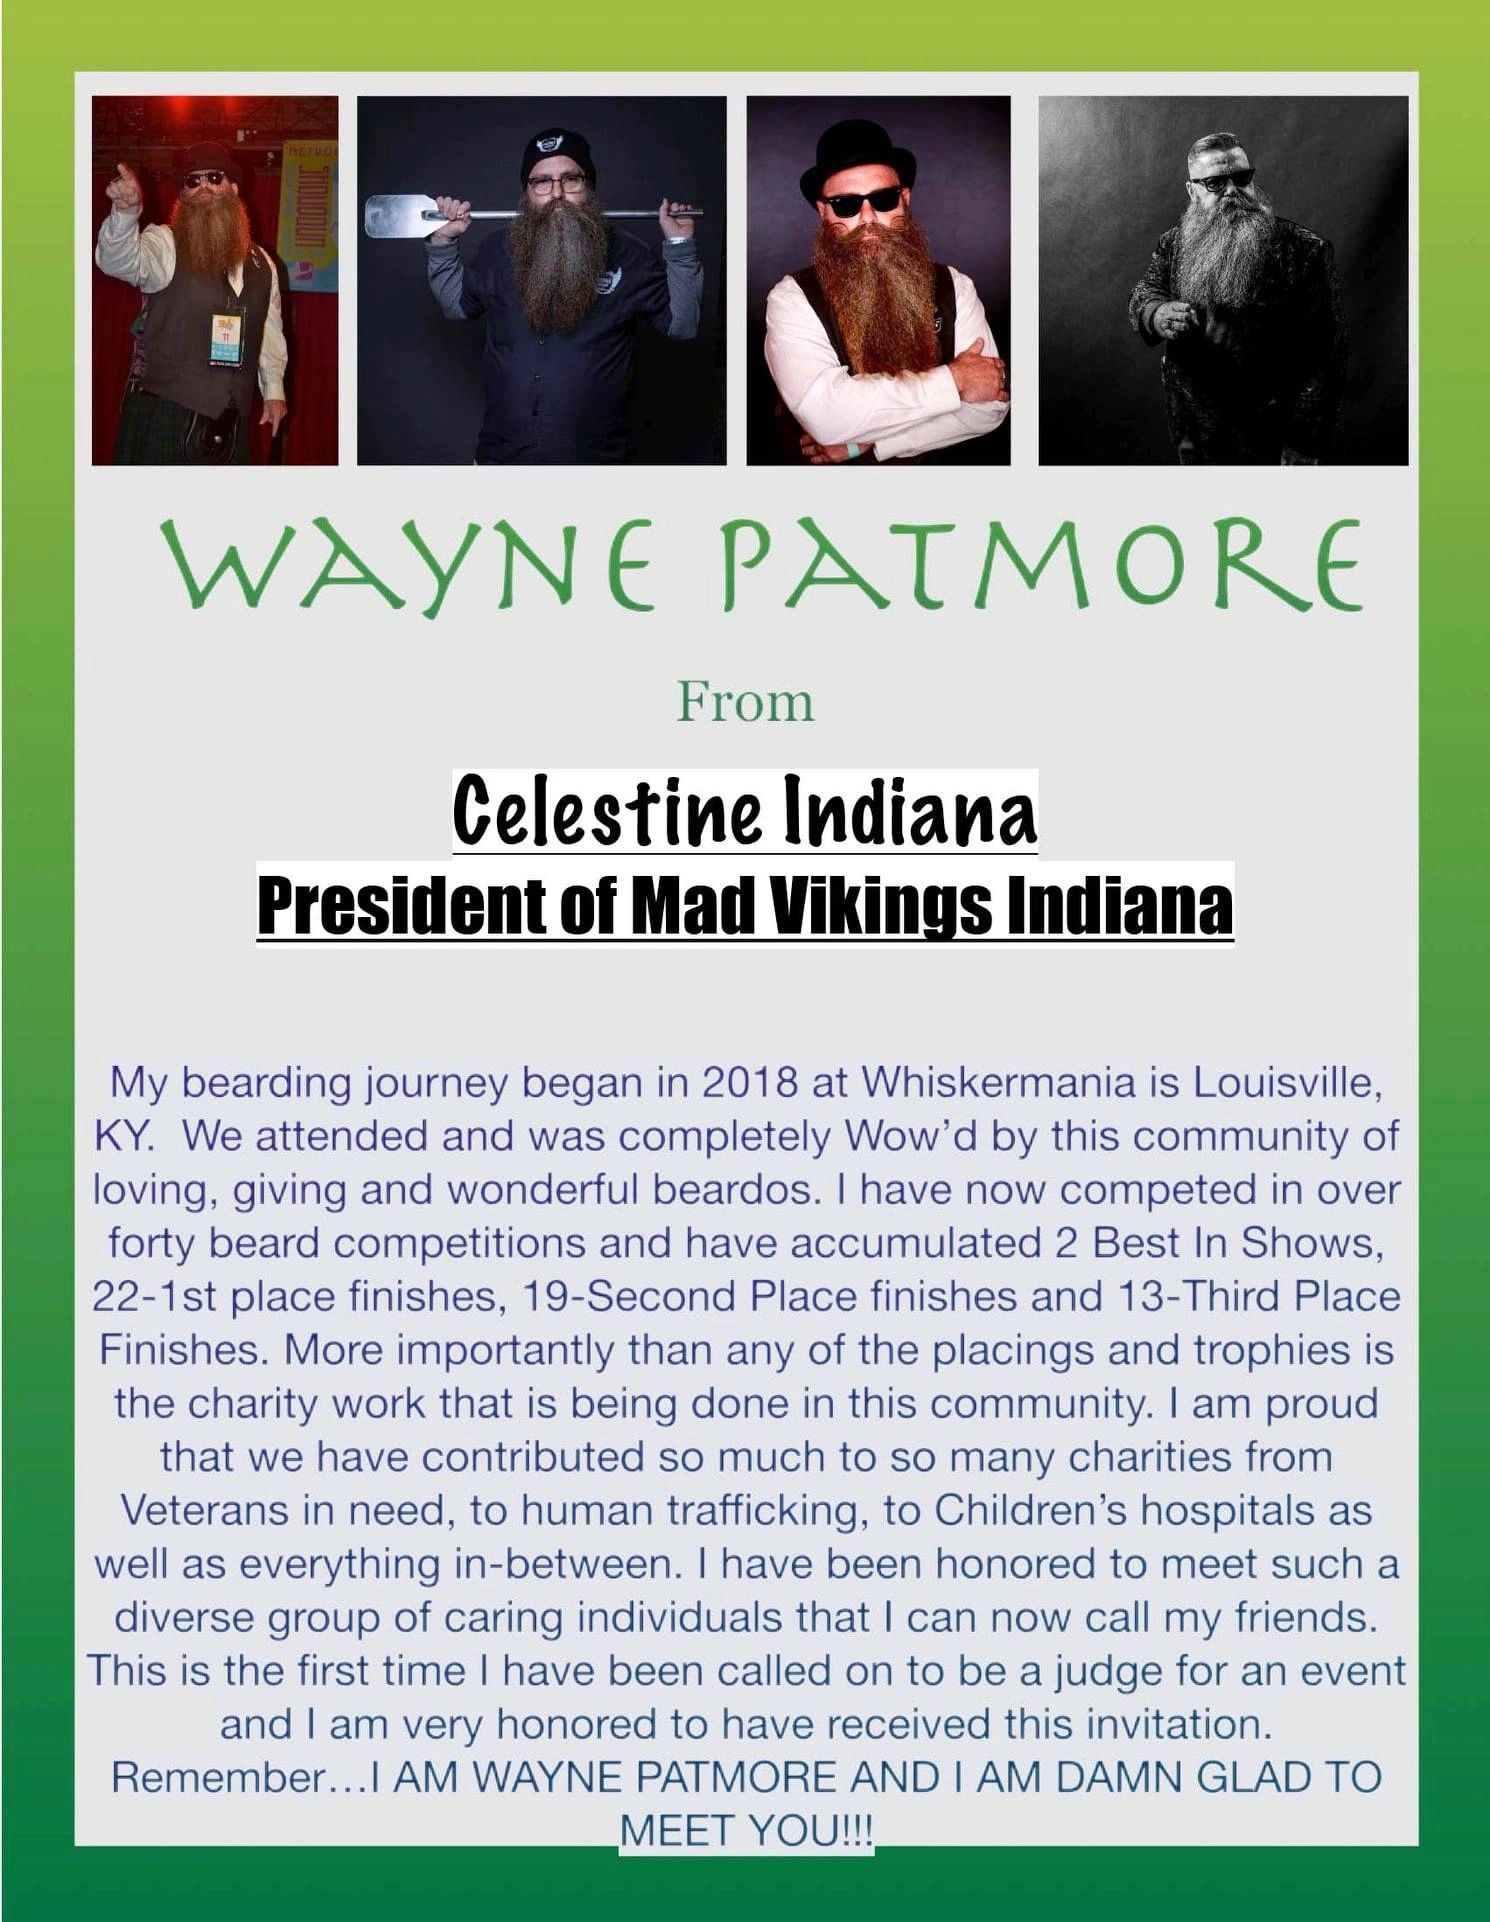 Wayne Patmore

